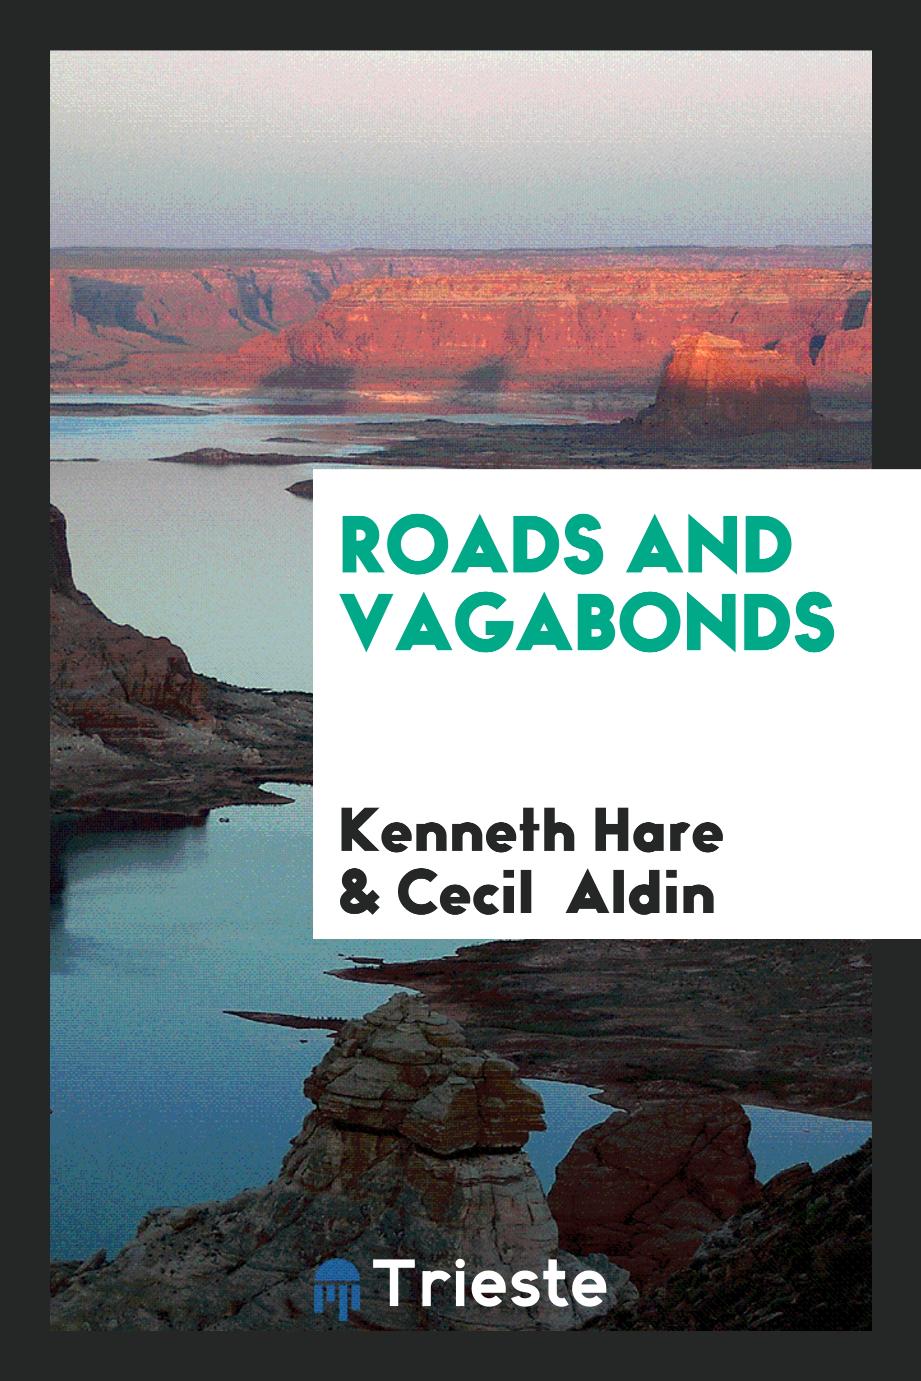 Roads and vagabonds